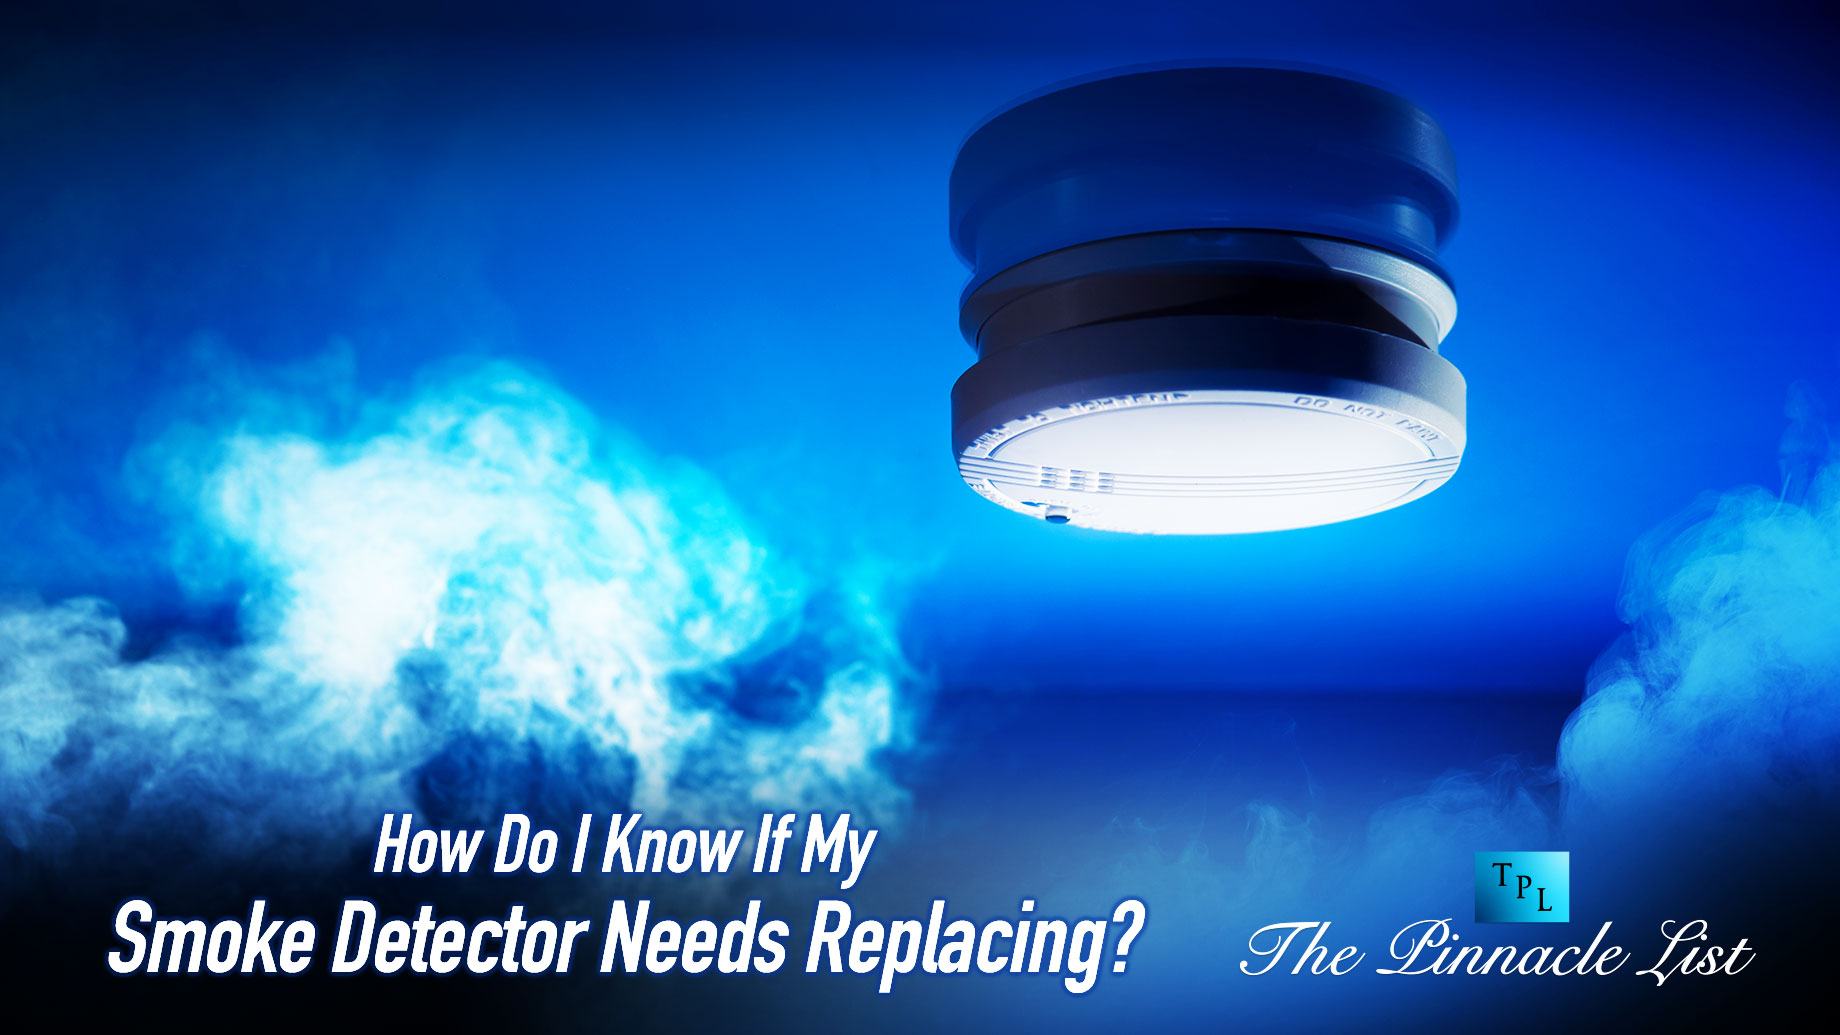 How Do I Know If My Smoke Detector Needs Replacing?